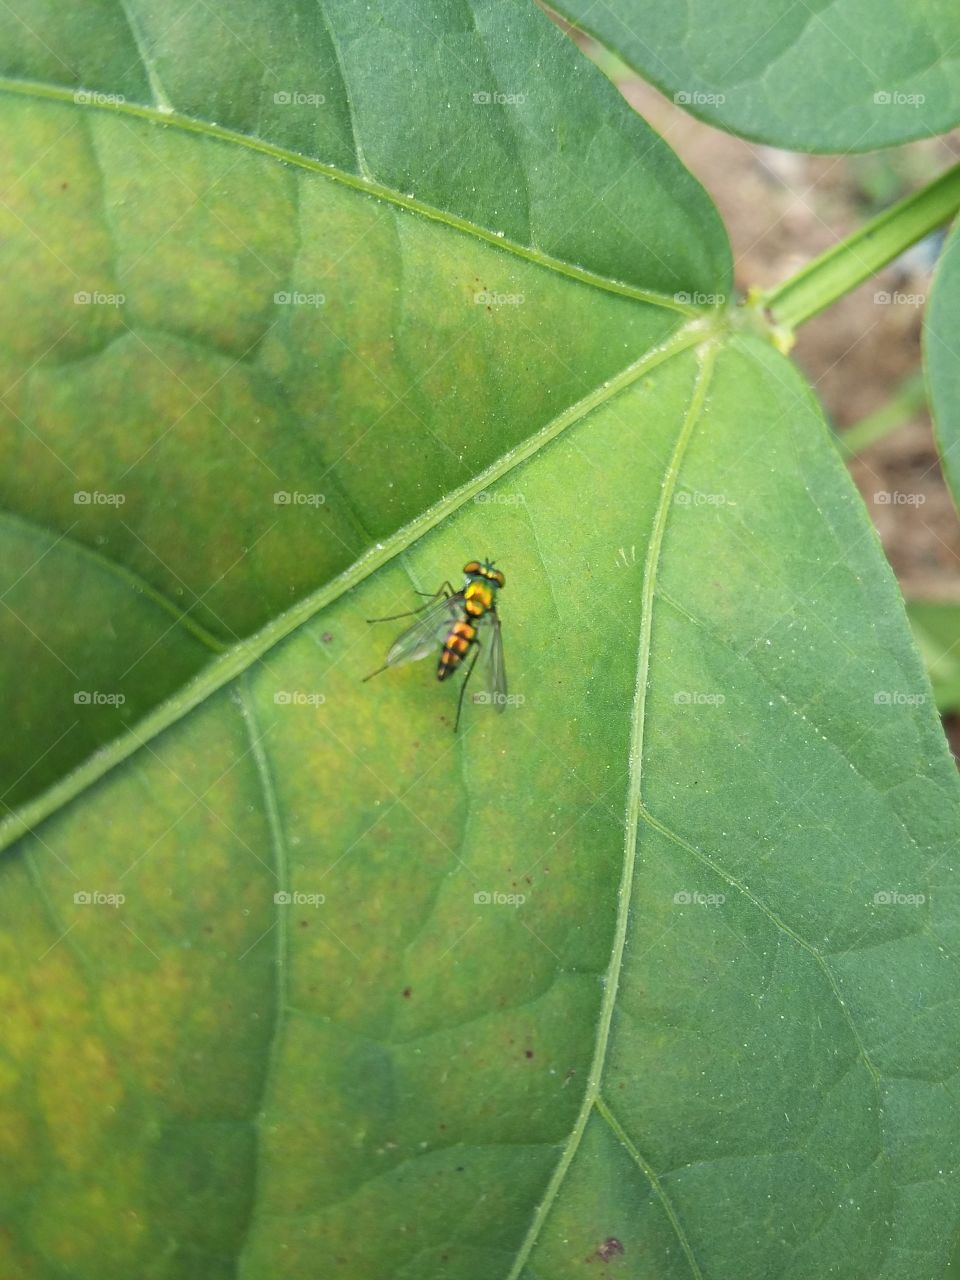 Predominant fly in the backyards of houses in northeastern Brazil.